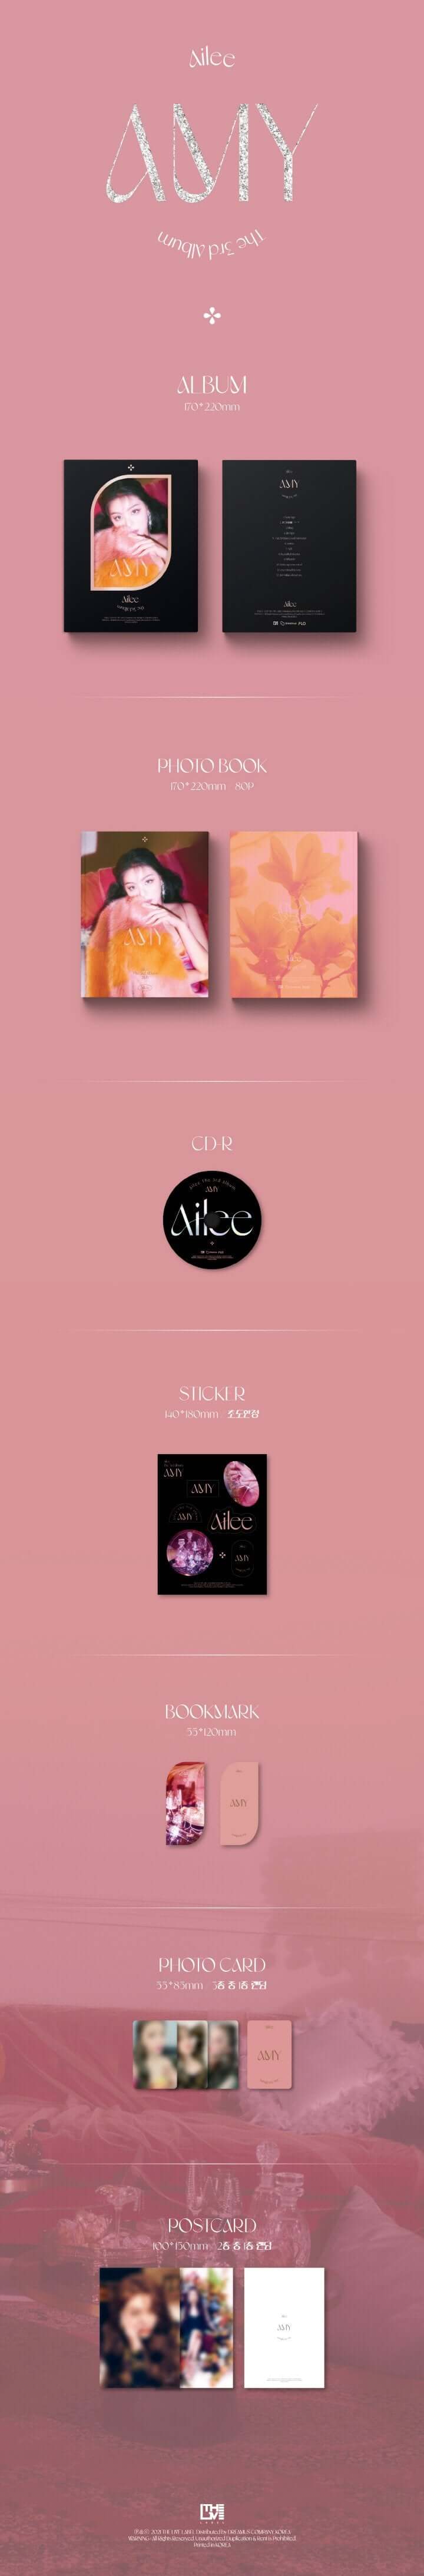 Ailee - AMY (3rd アルバム)